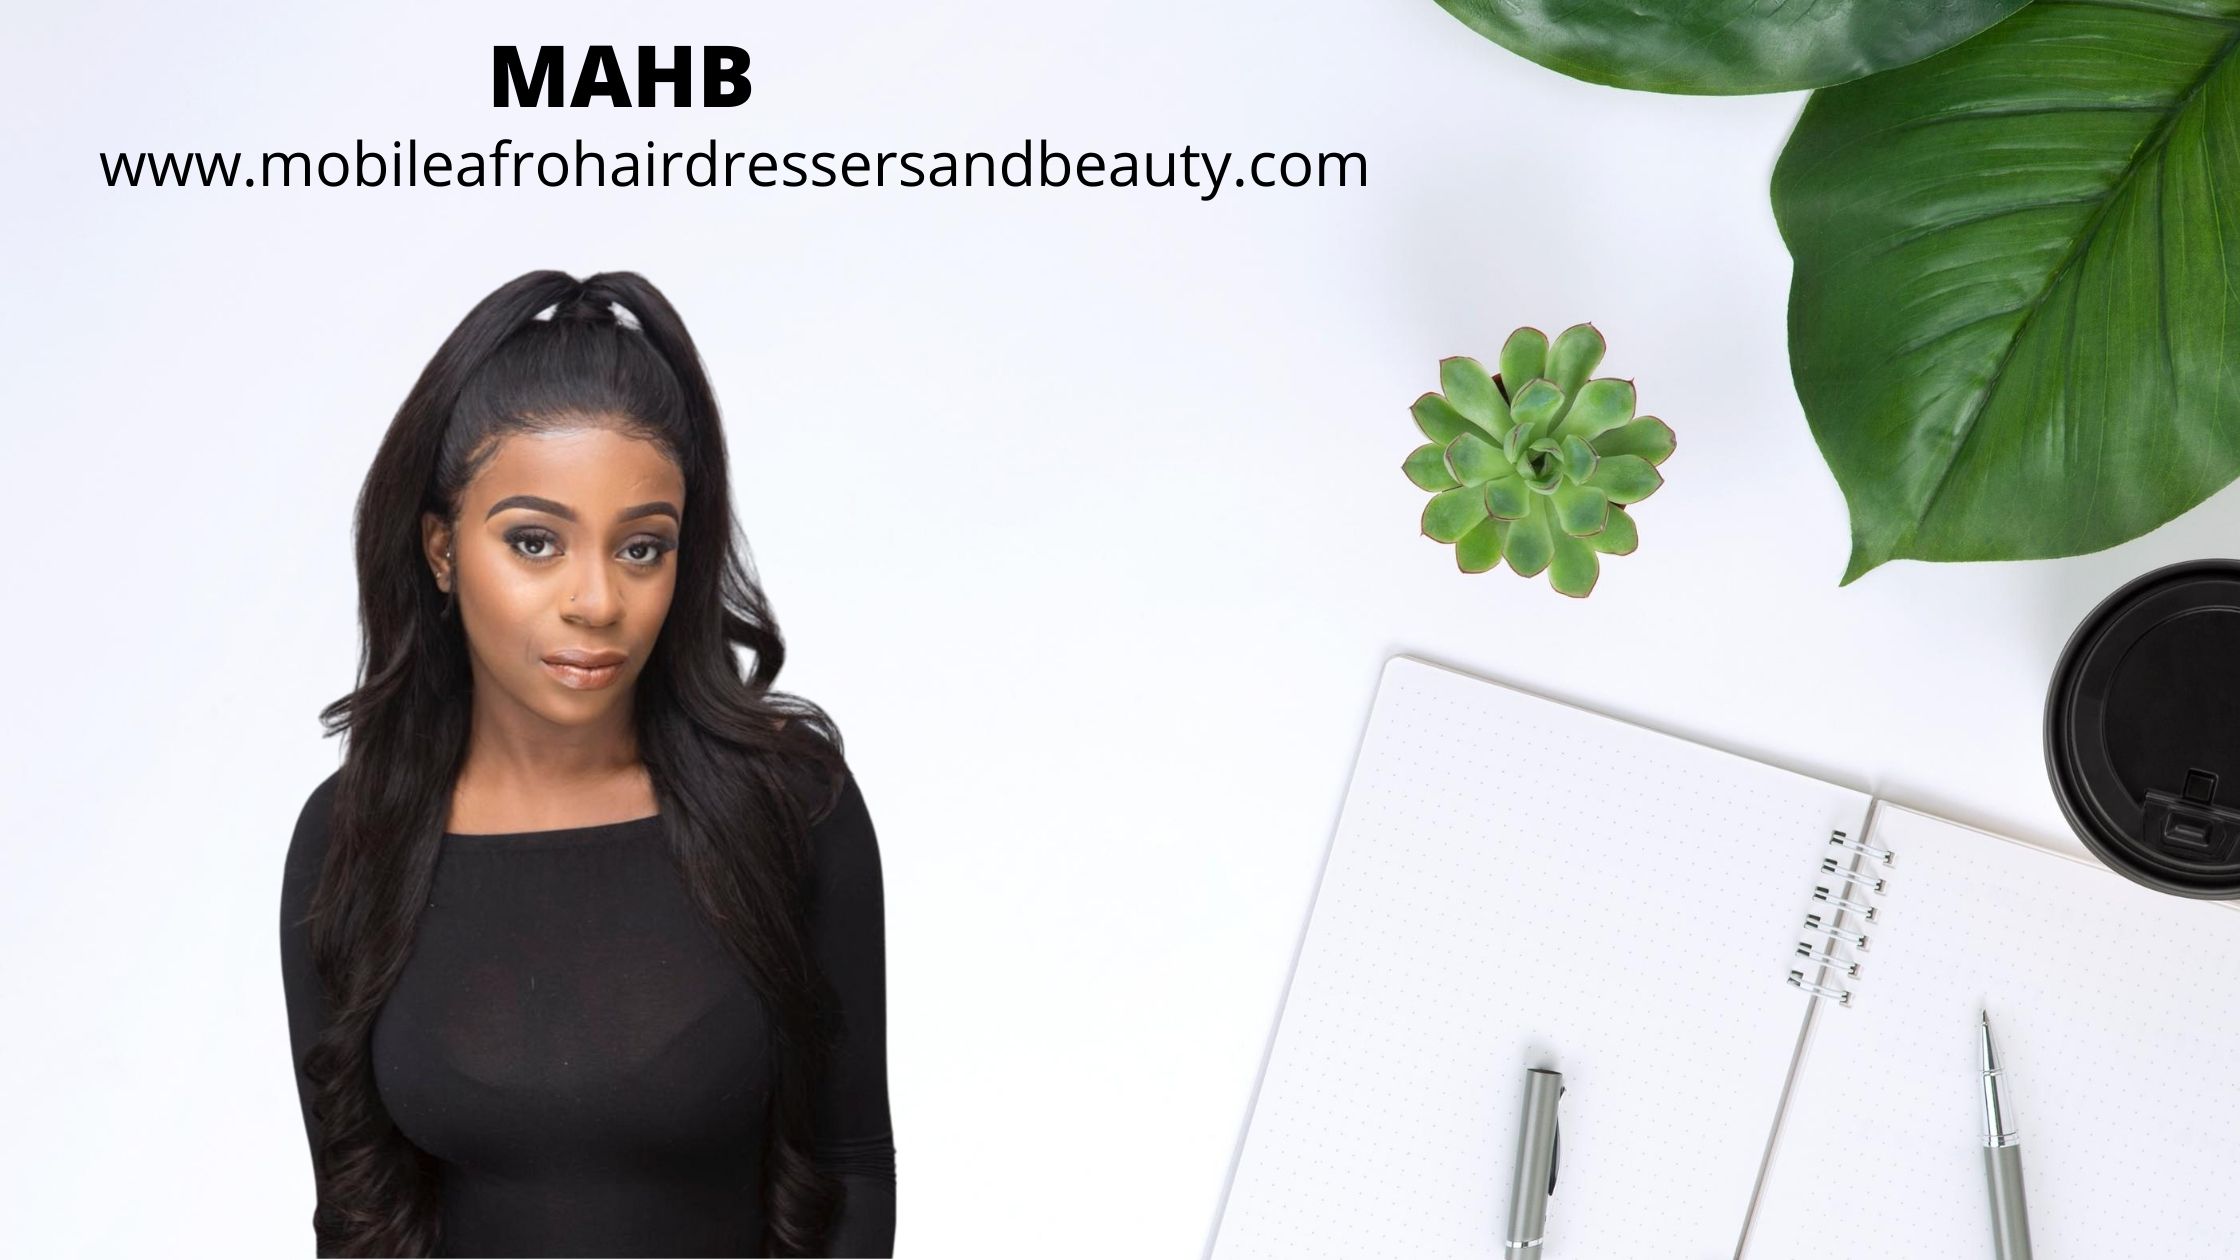 Home Service Hair Braiding, Box braiding, braiding, Twist, Cornrows, Mobile  Afro Hairdressers UK – MAHB